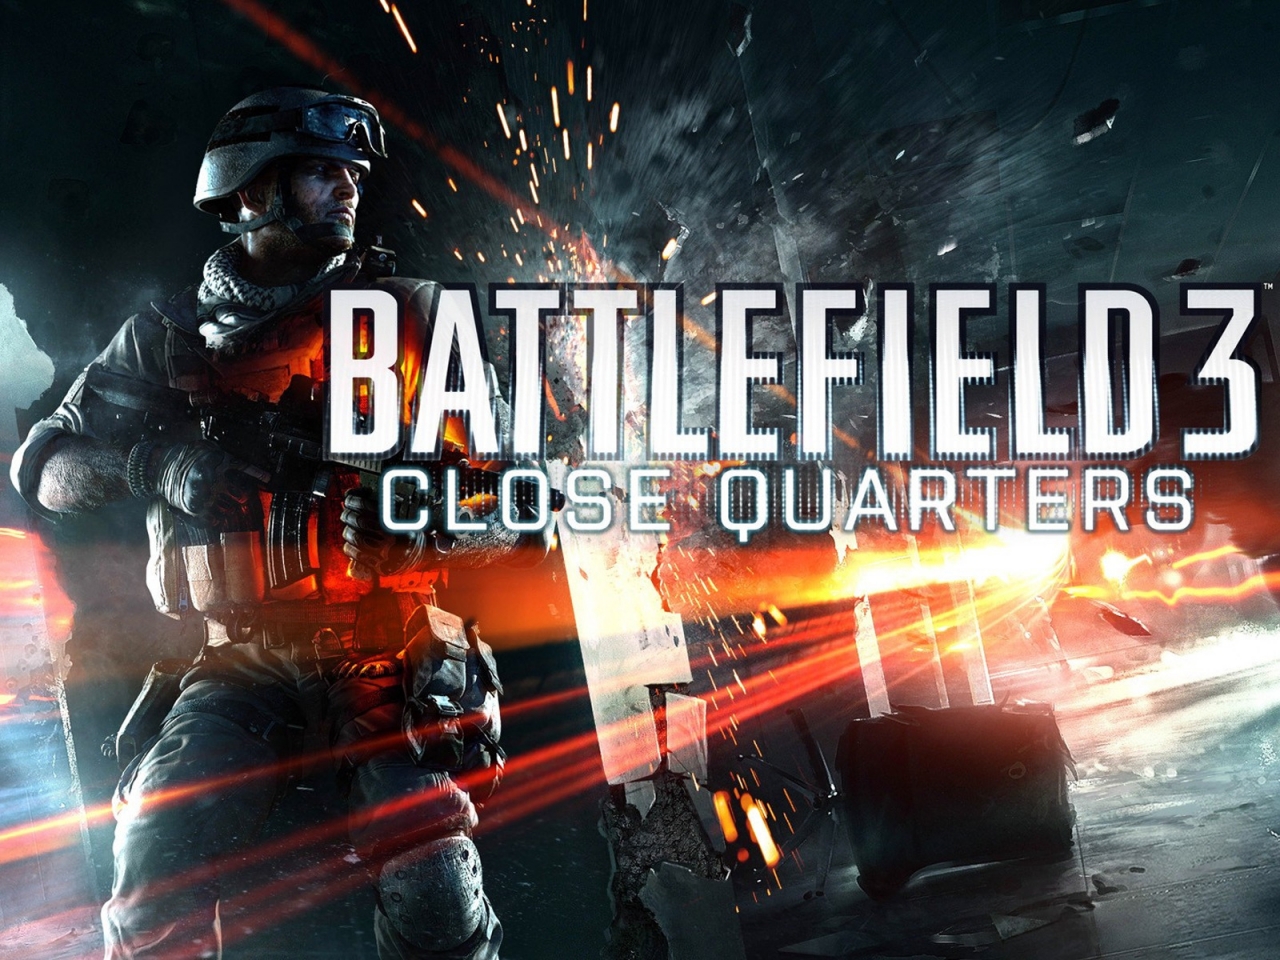 Battlefield 3 Close Quarters for 1280 x 960 resolution